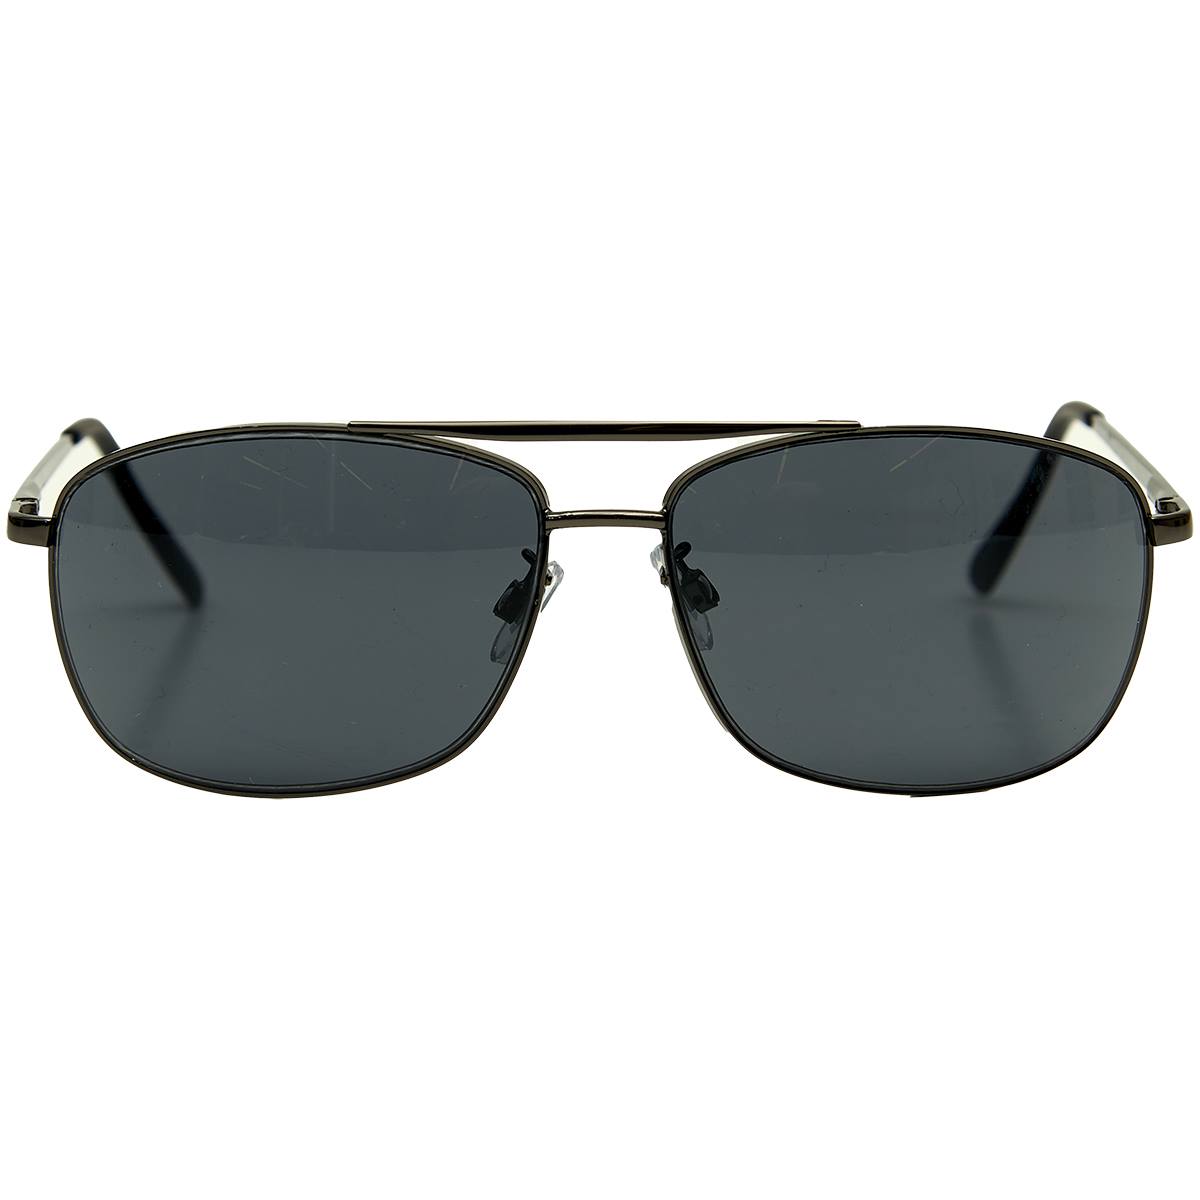 Mens Tropic-Cal Frank Pilot Sunglasses